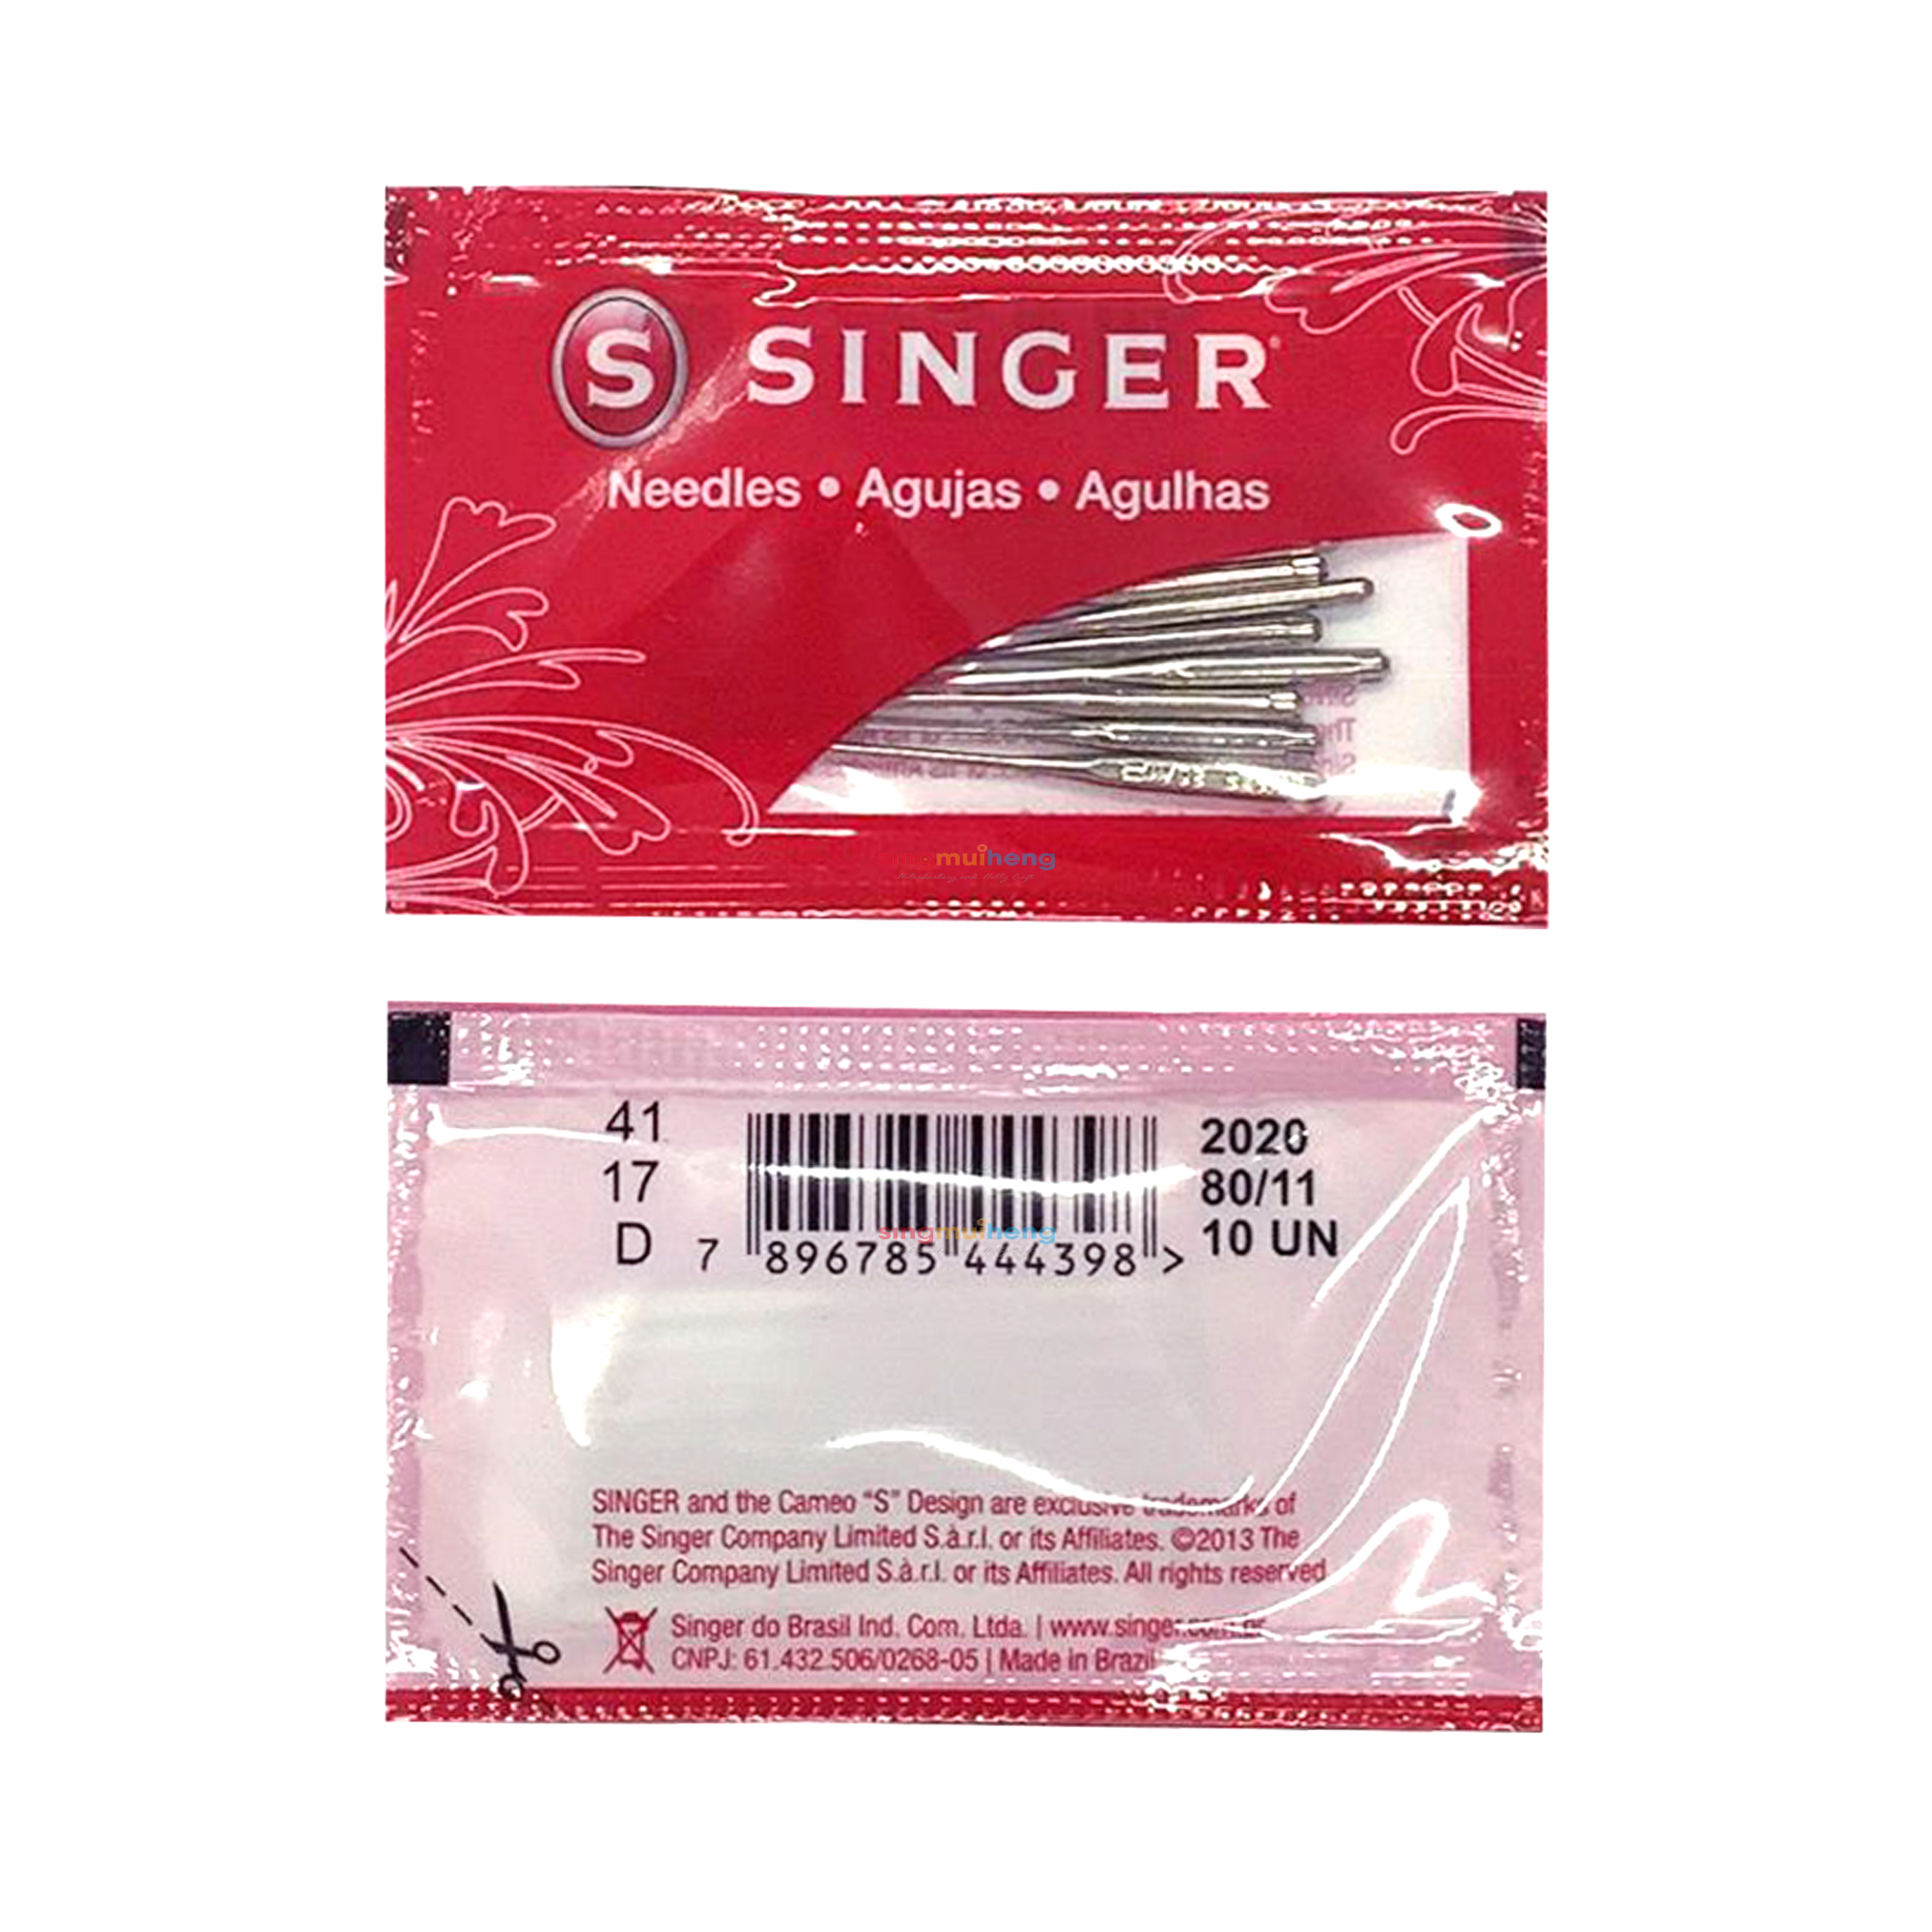 Singer – Sewing Machine Needles 2020 (Assorted Sizes) (10 Pcs) - SMH Craft